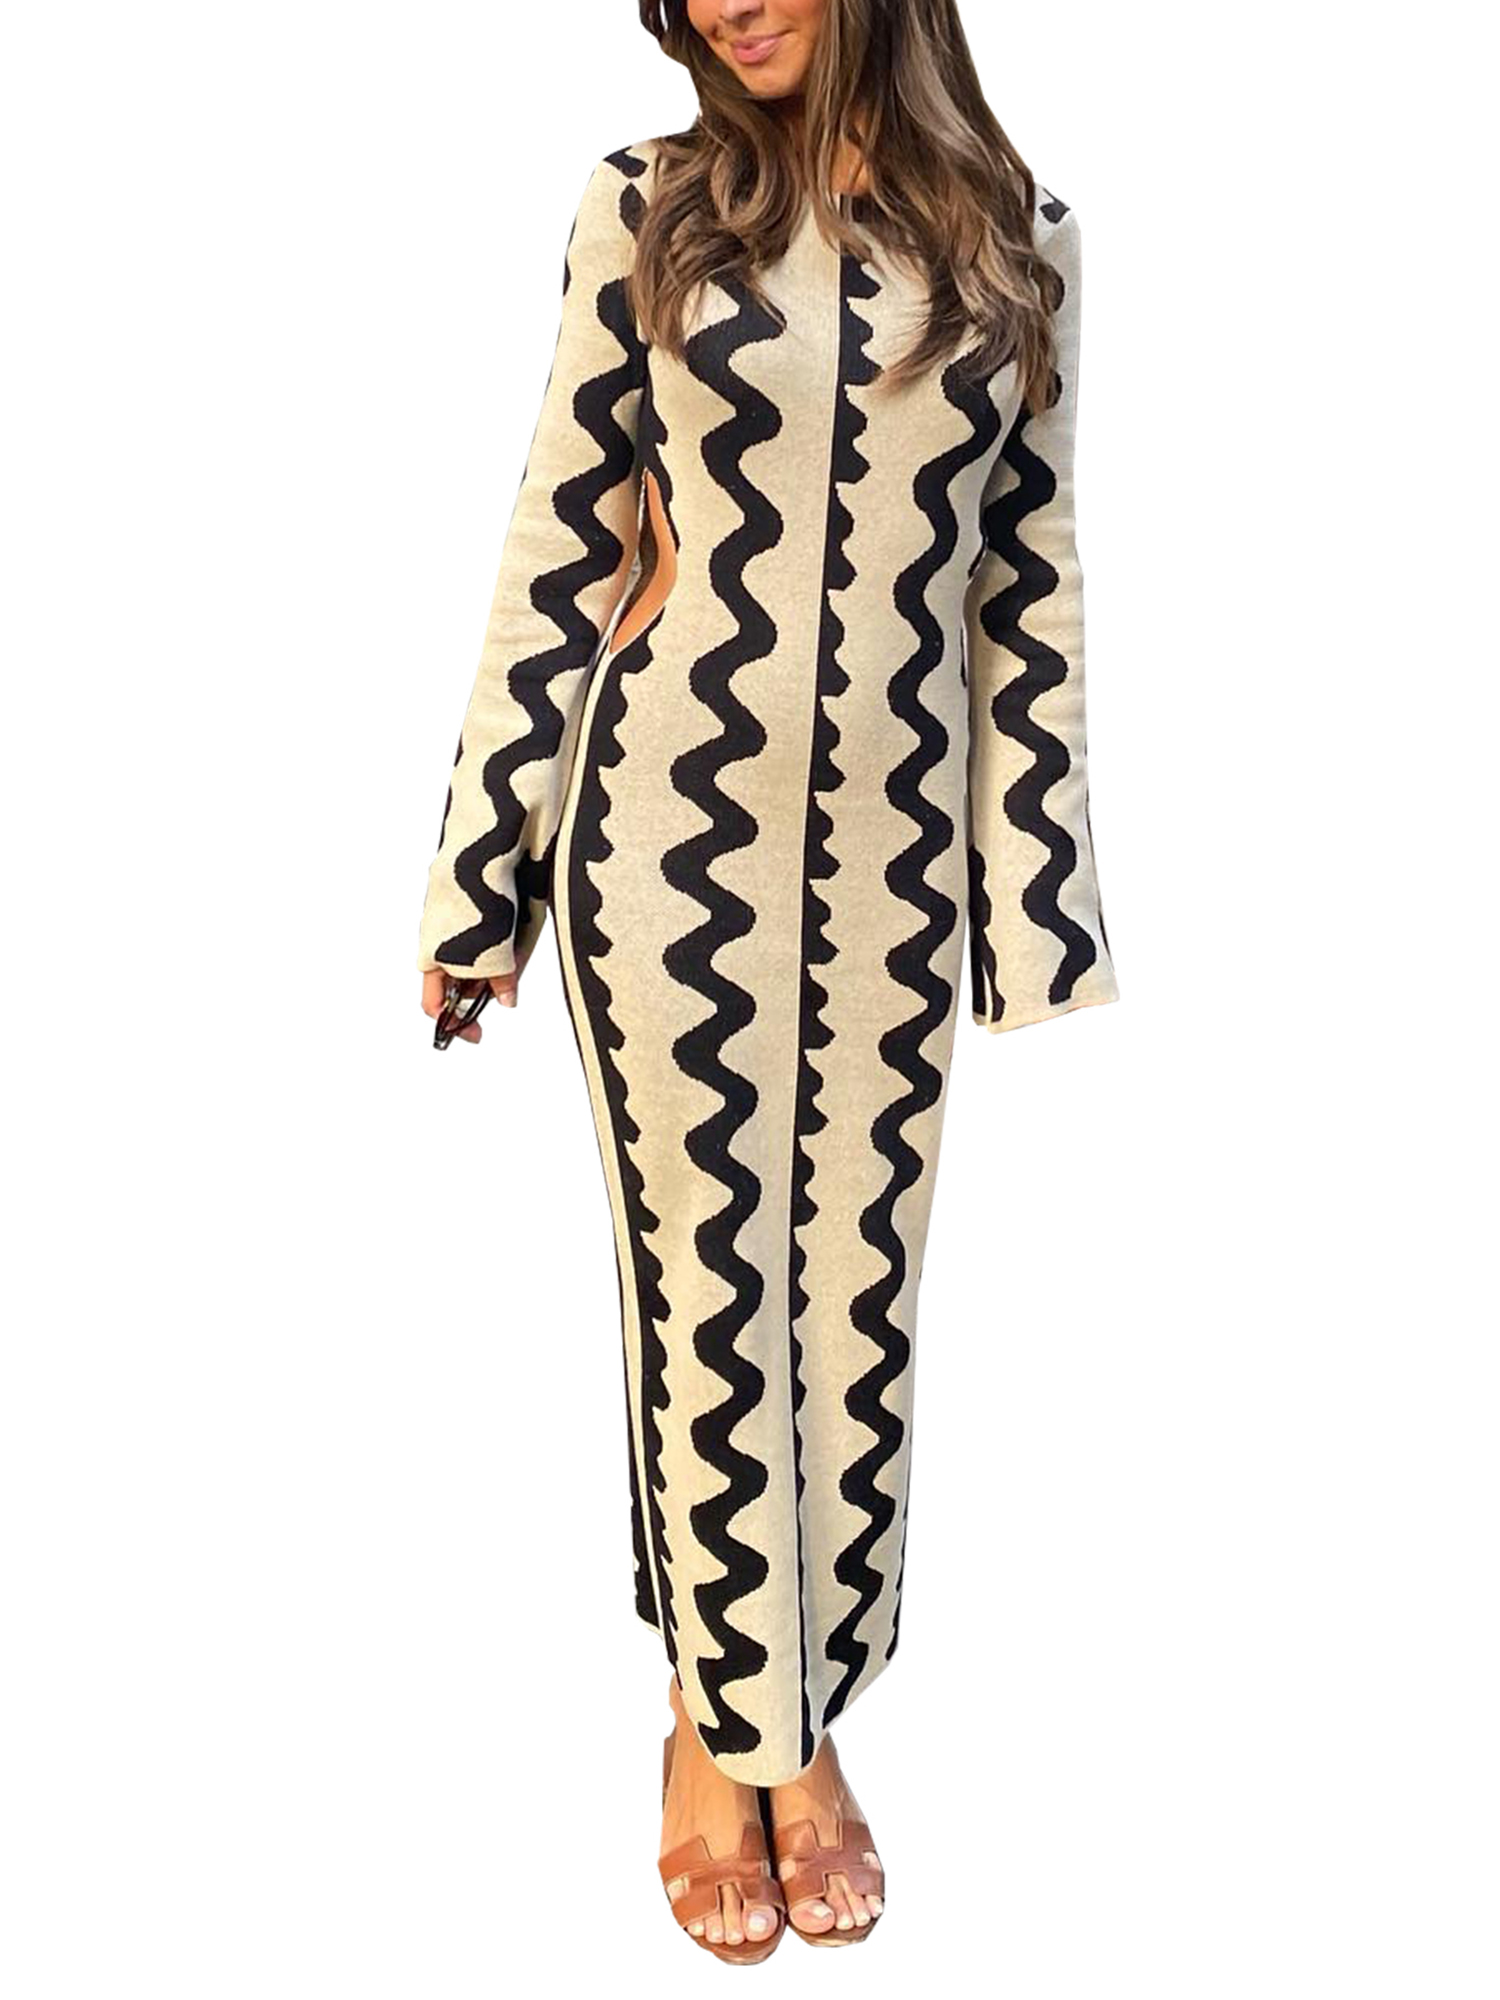 TheFound Women's Casual Wave Pattern Knit Dress Elegant Cutout Long ...